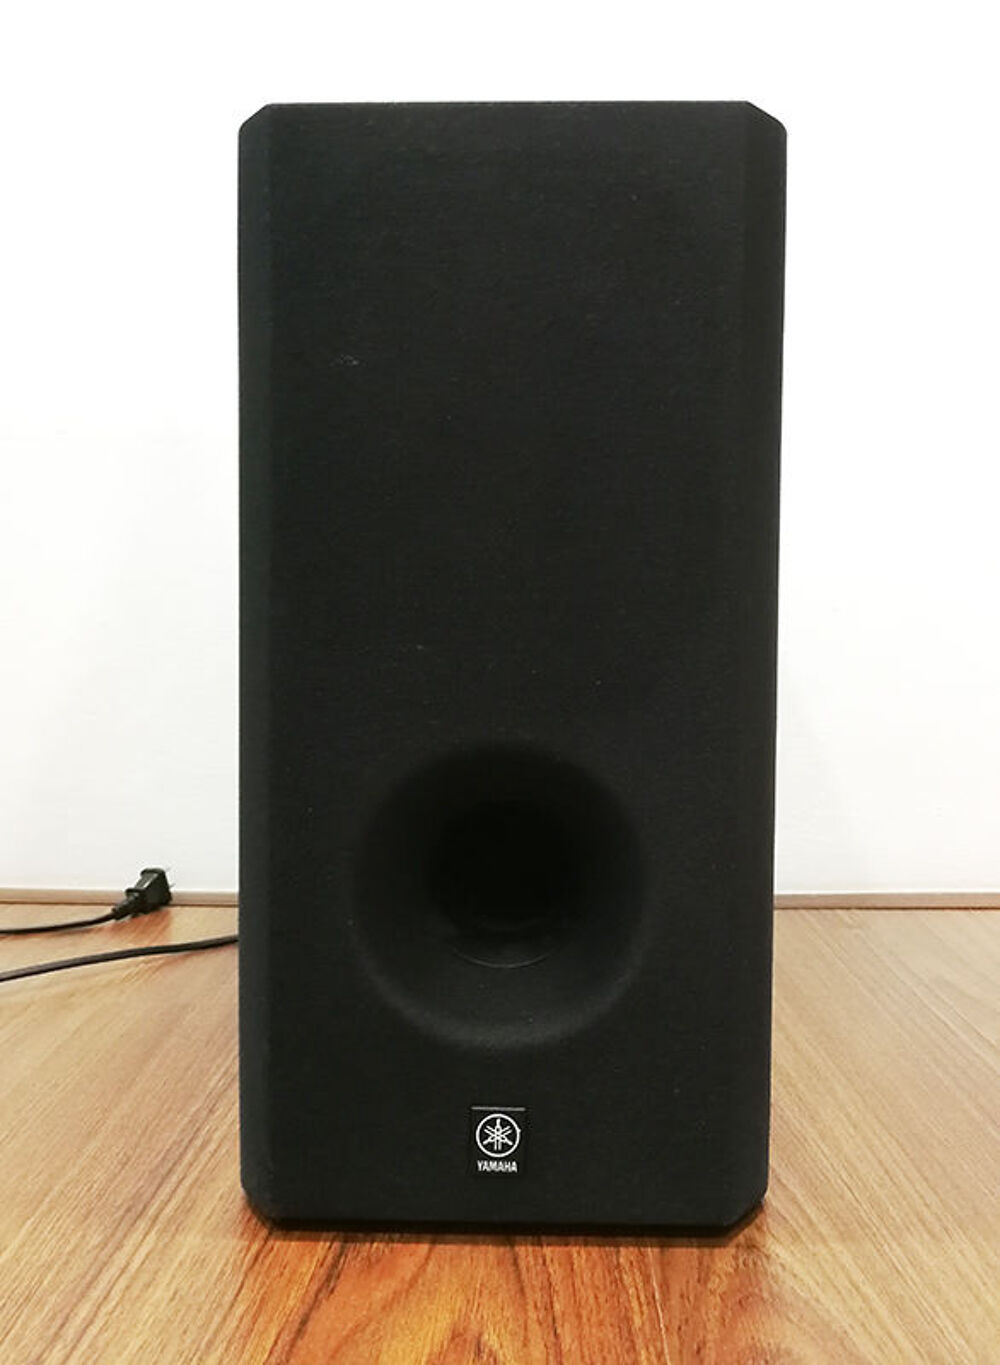 Yamaha Home cinema 5.1 Speaker System SW-P201 
Audio et hifi